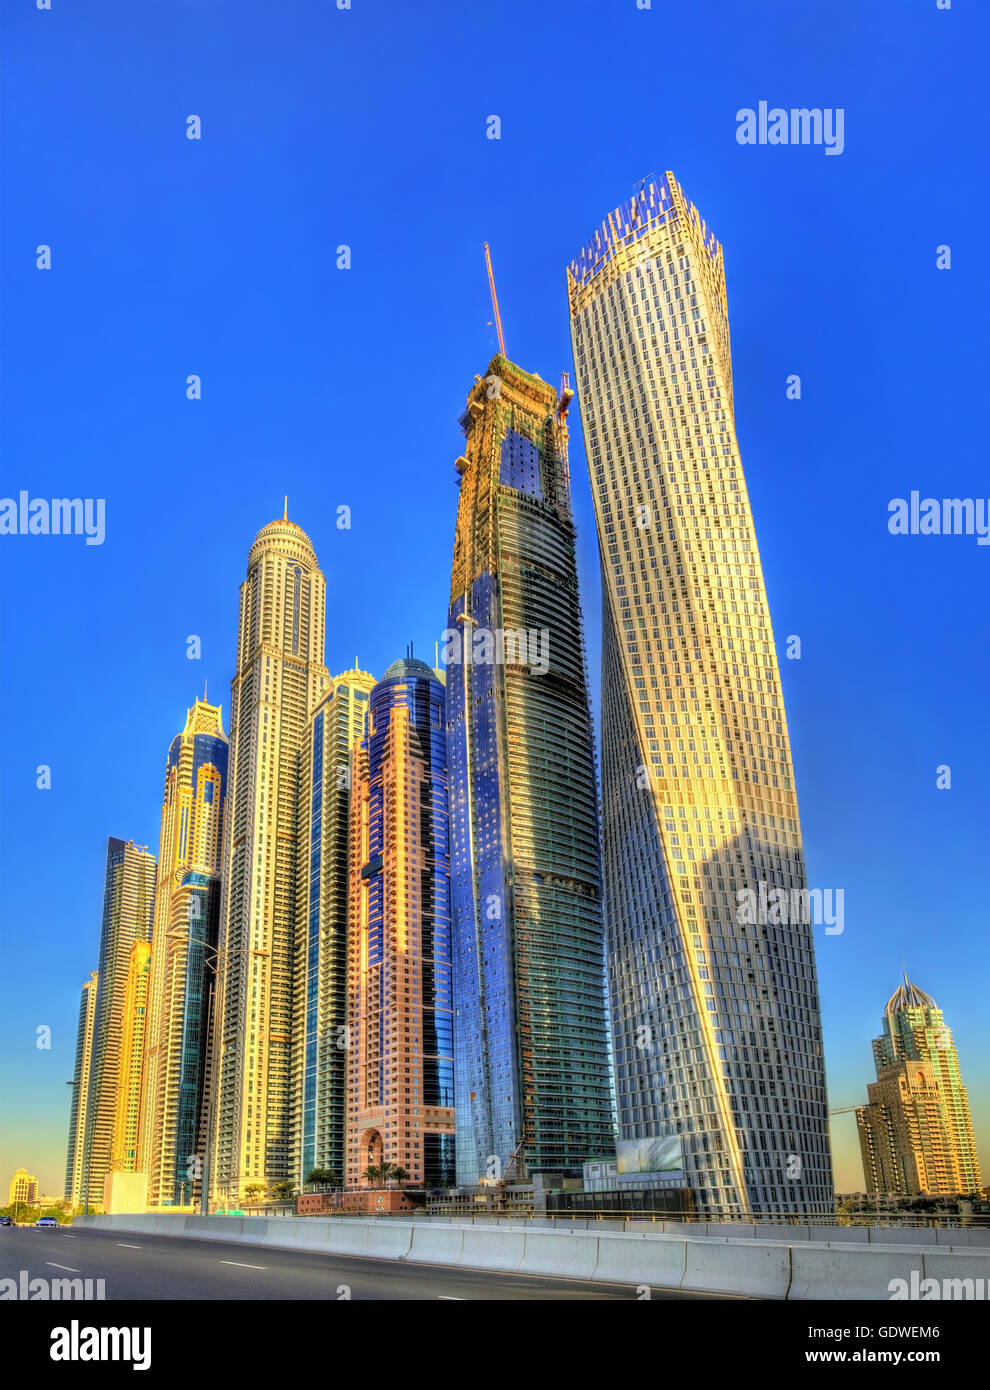 Skyscrapers in the World's Tallest Tower Block - Jumeirah, Dubai Stock Photo